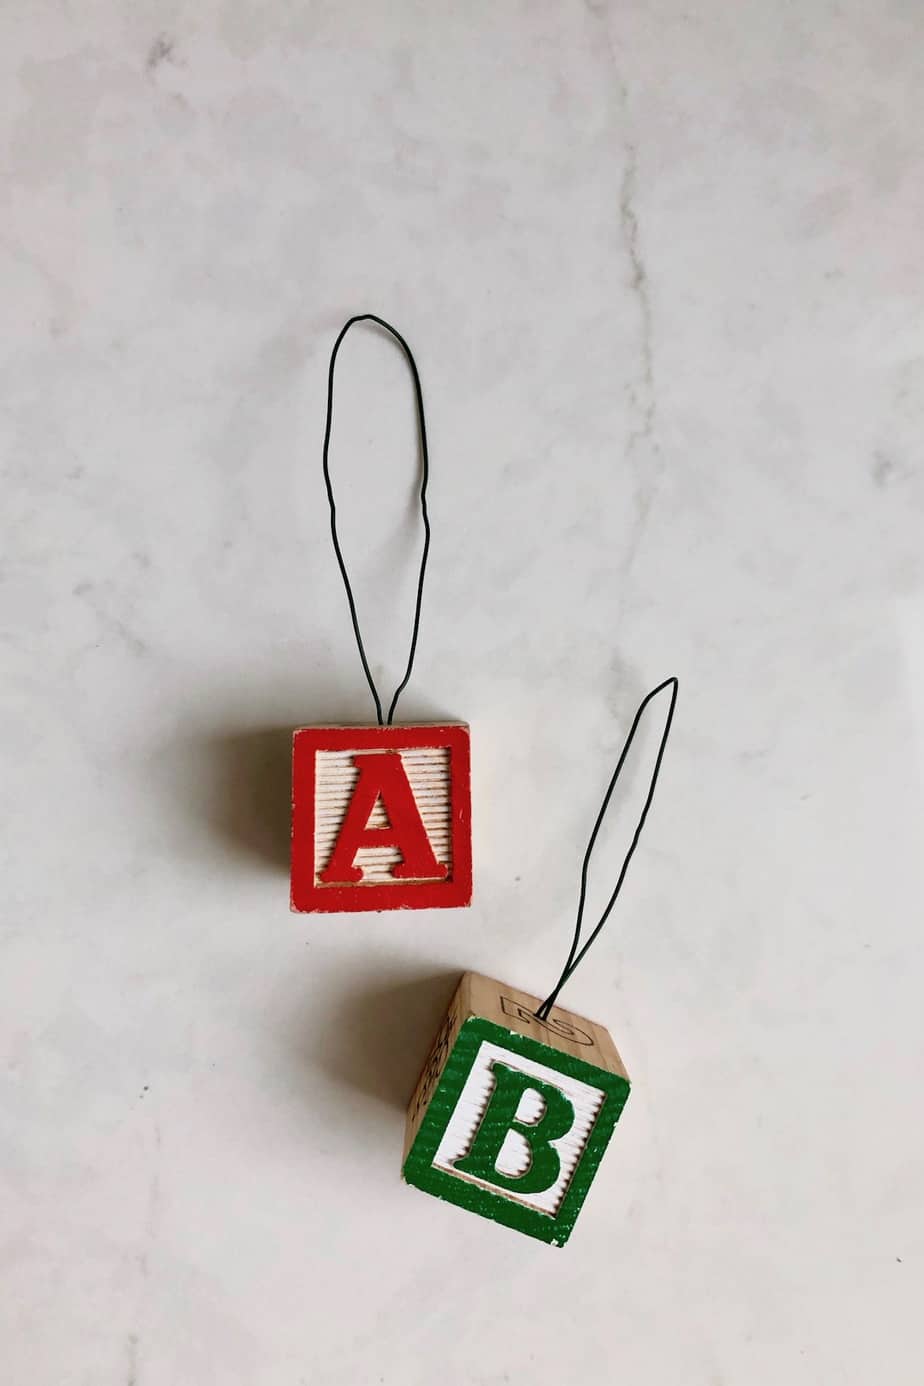 Alphabet block ornaments